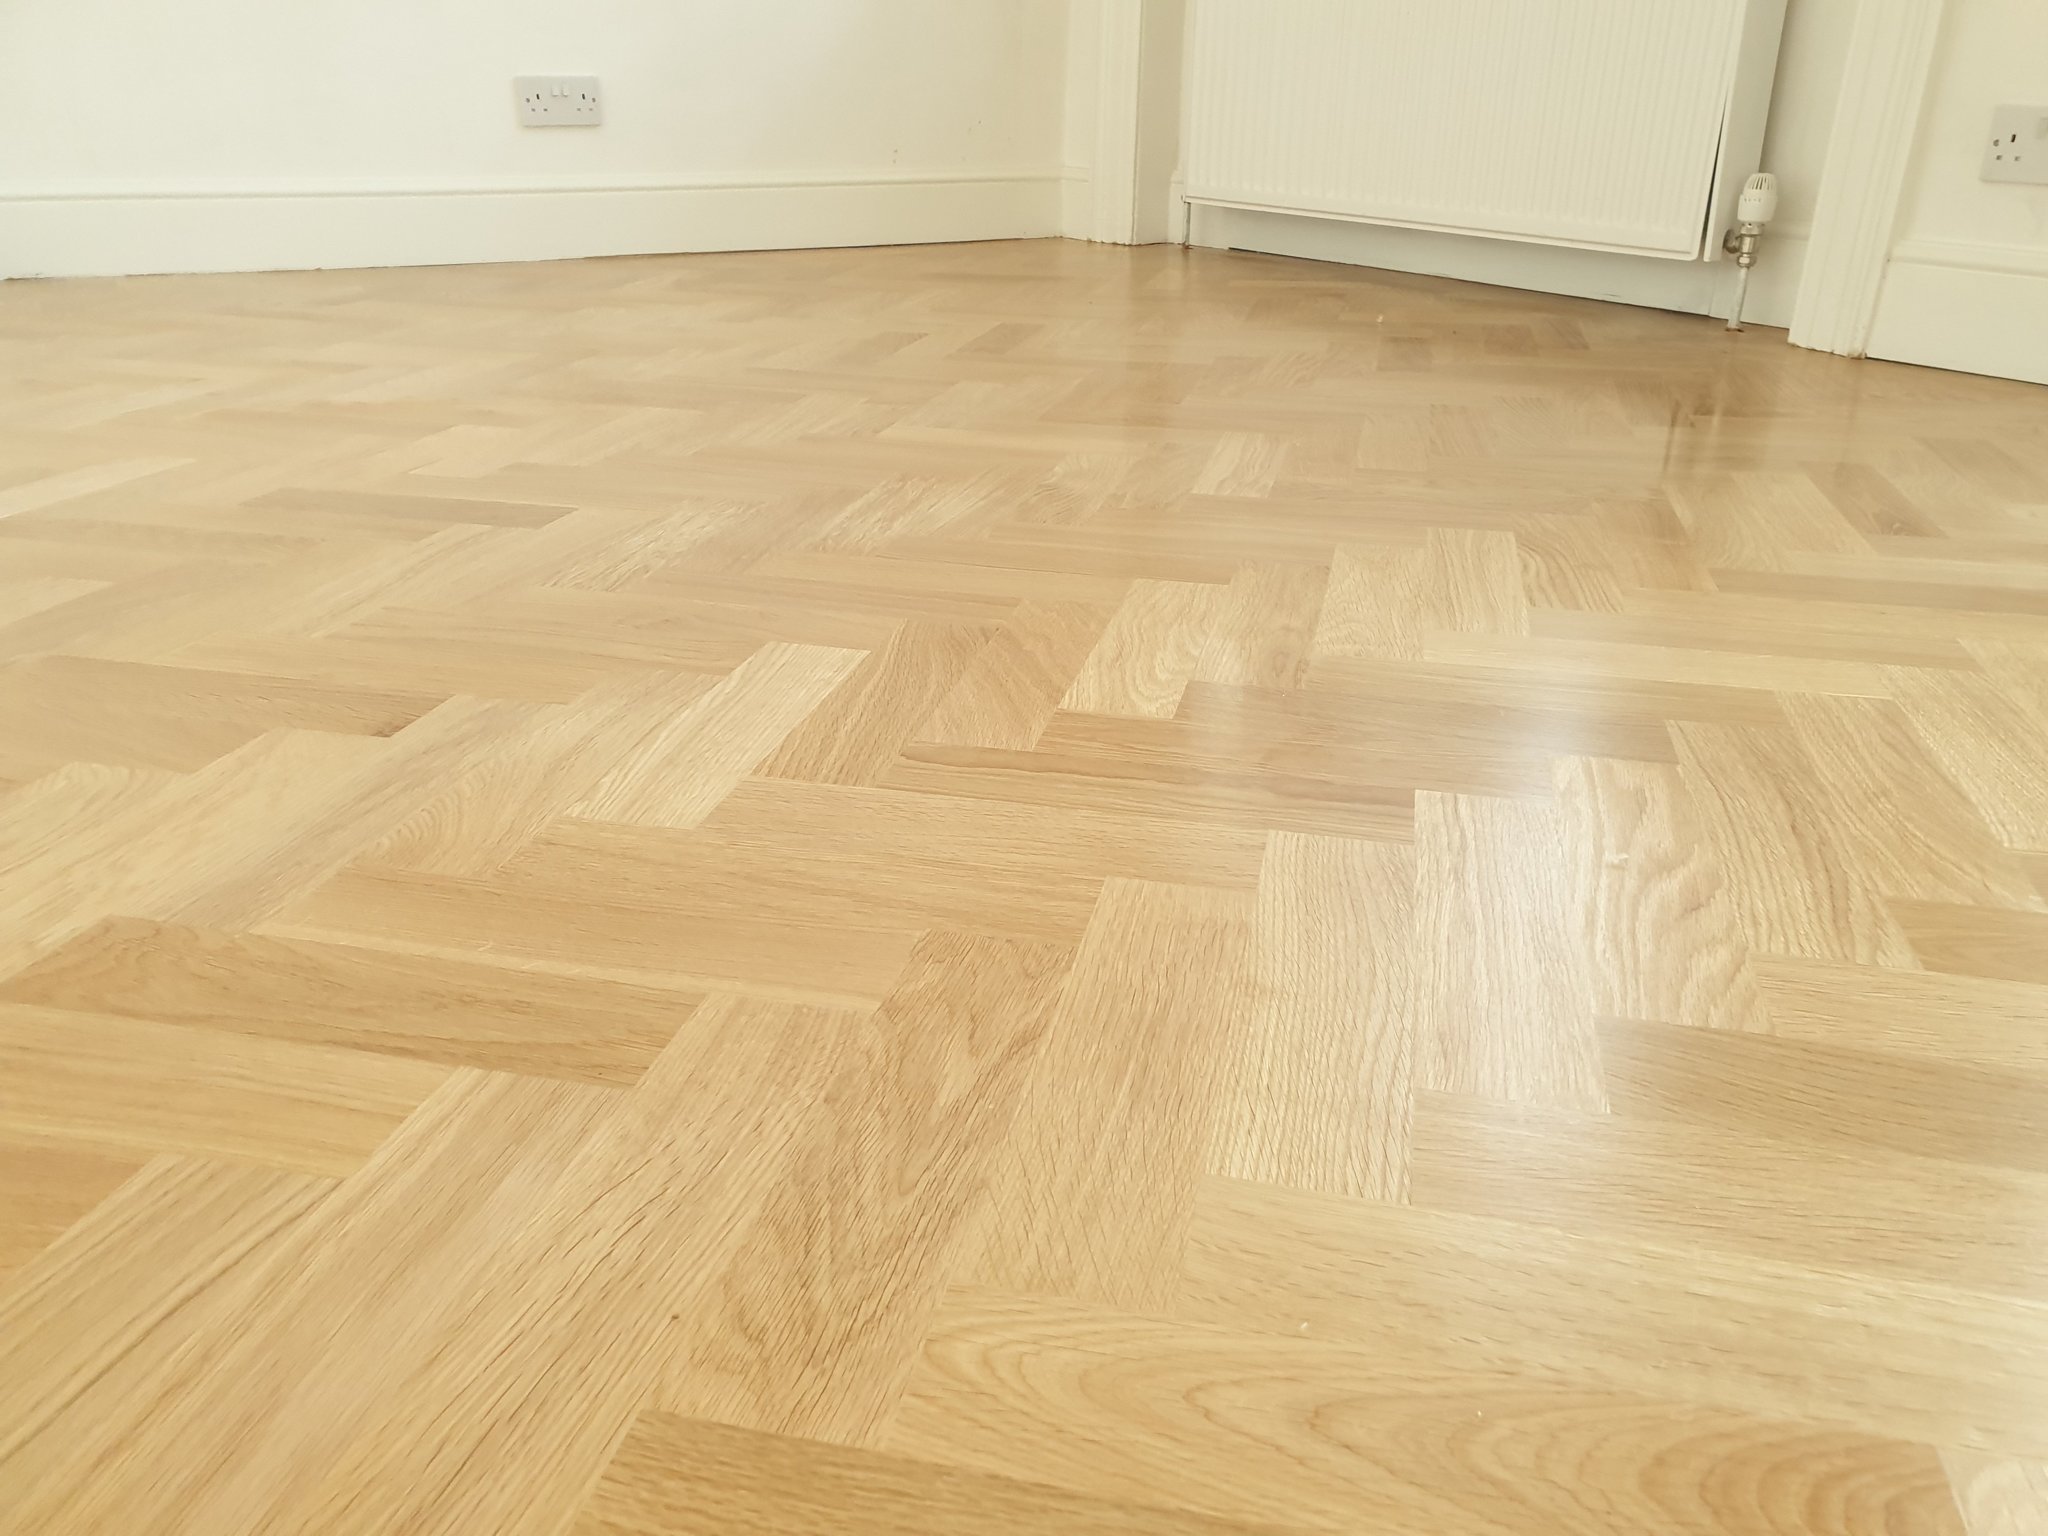 Timbercraft Oak Parquet Flooring, Prime, Unfinished, 70x16x280 Mm image